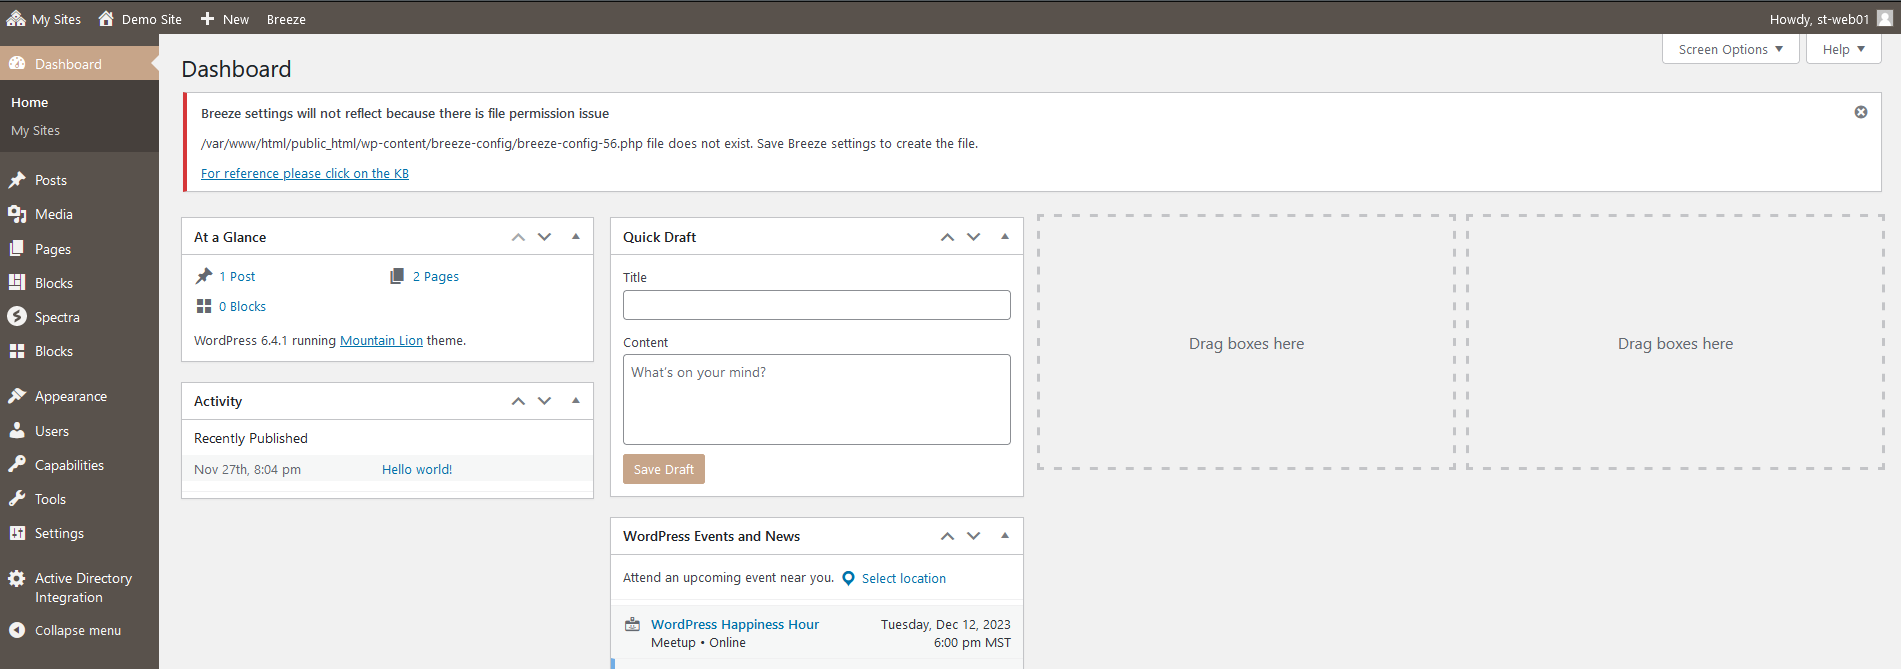 Wordpress Dashboard Screenshot